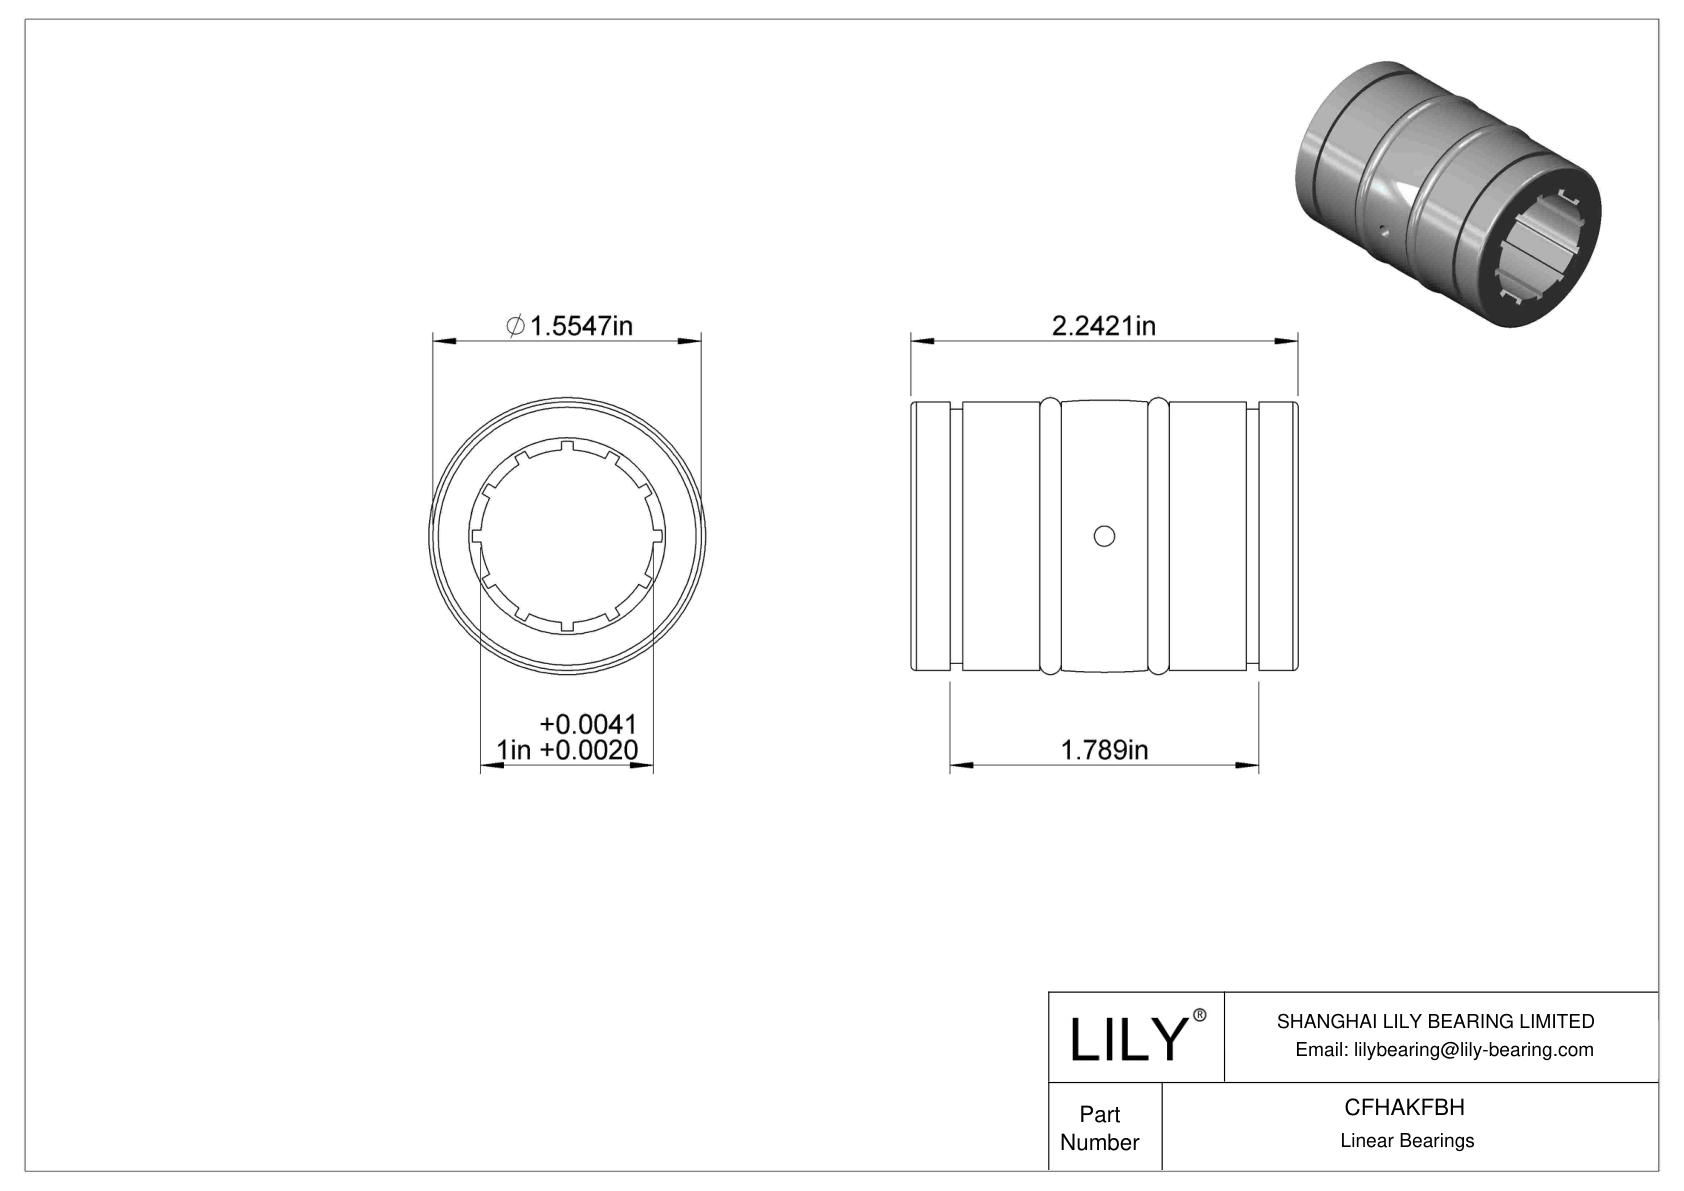 CFHAKFBH Dust-Resistant Linear Sleeve Bearings cad drawing